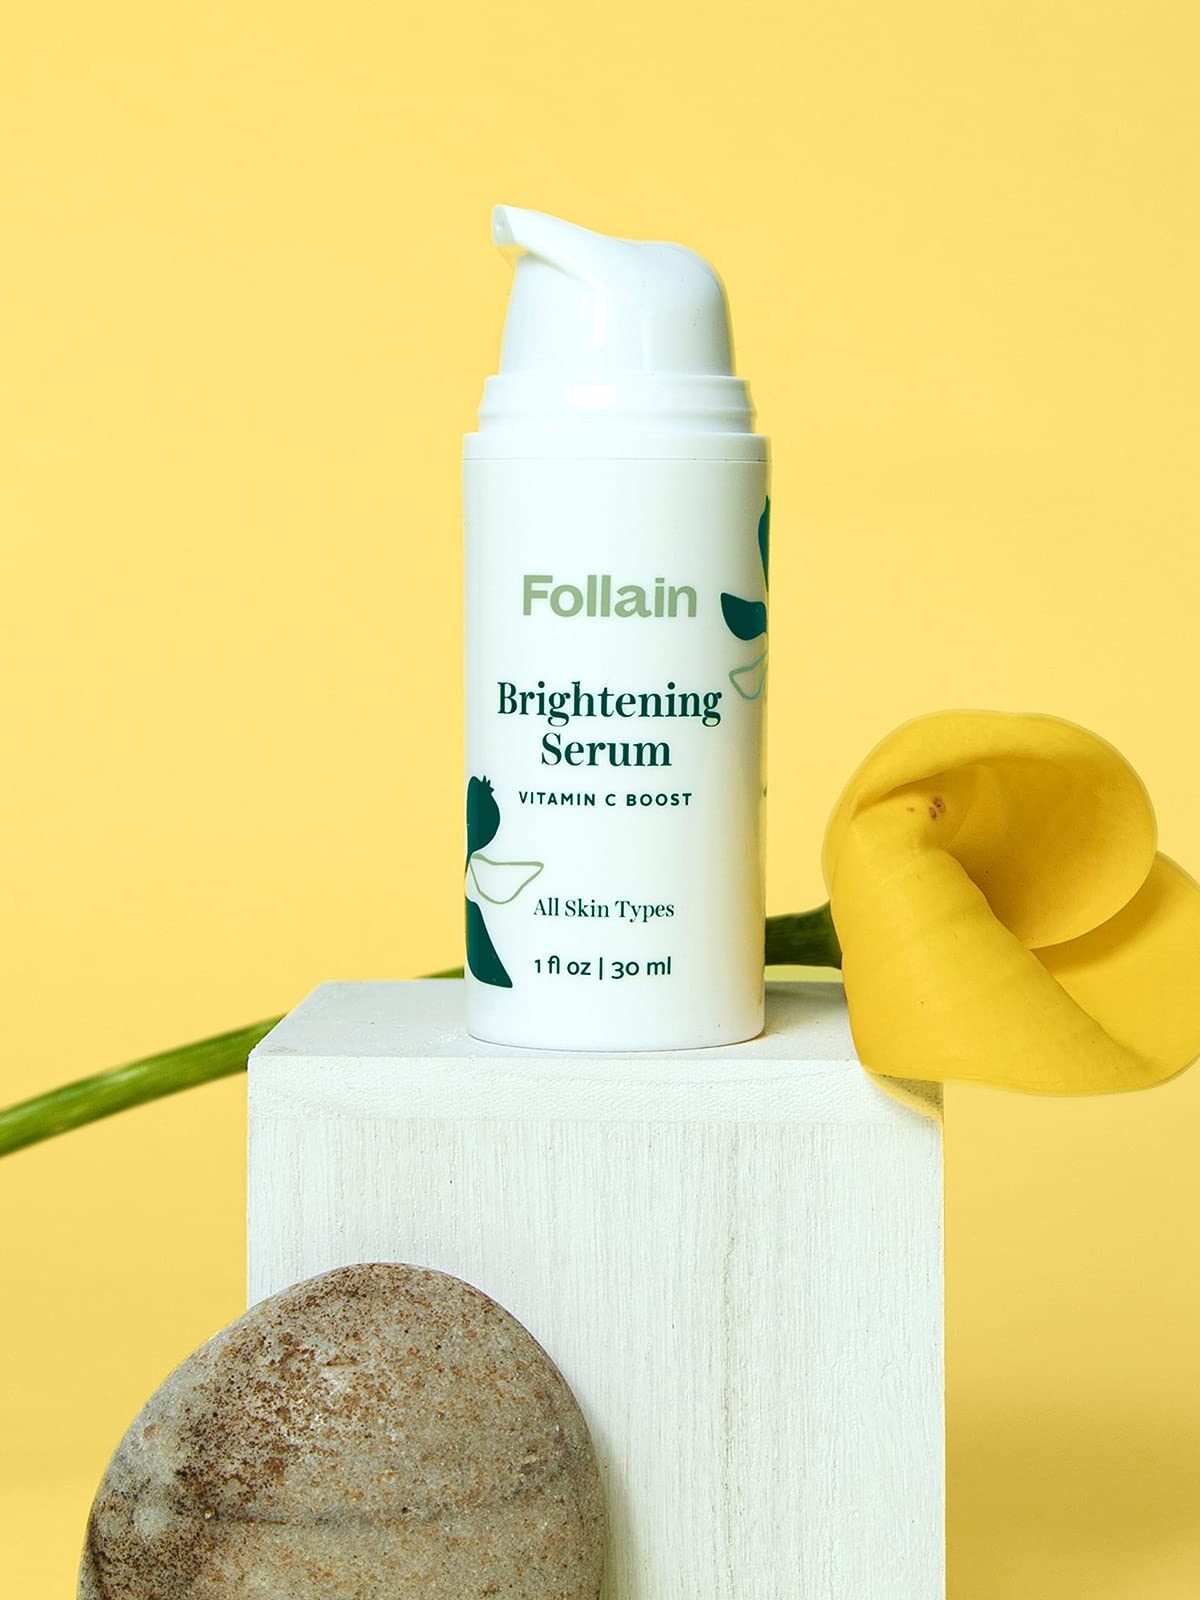 A product shot of Follain Brightening Serum